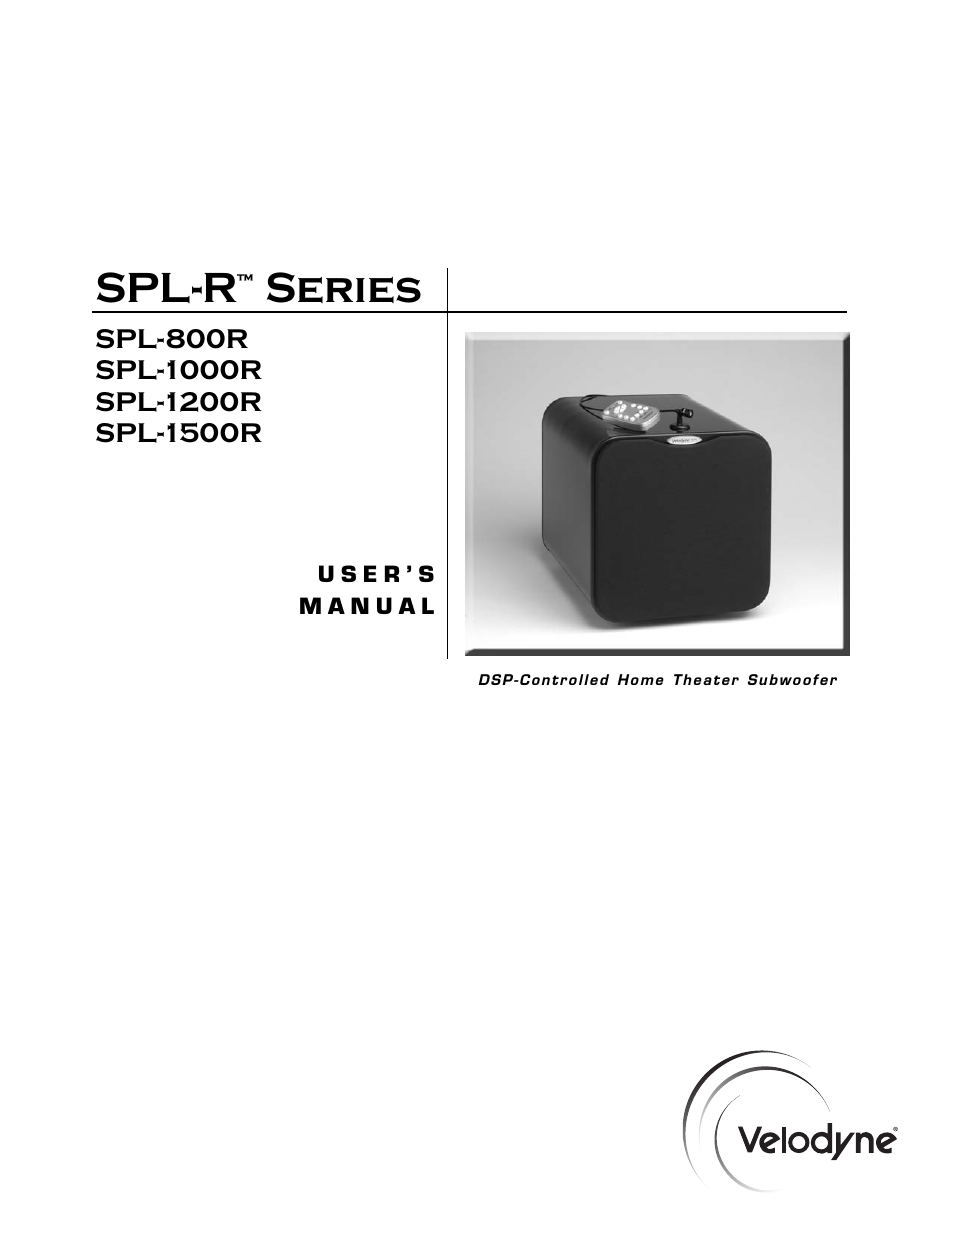 Velodyne SPL-R Series SPL-1500R